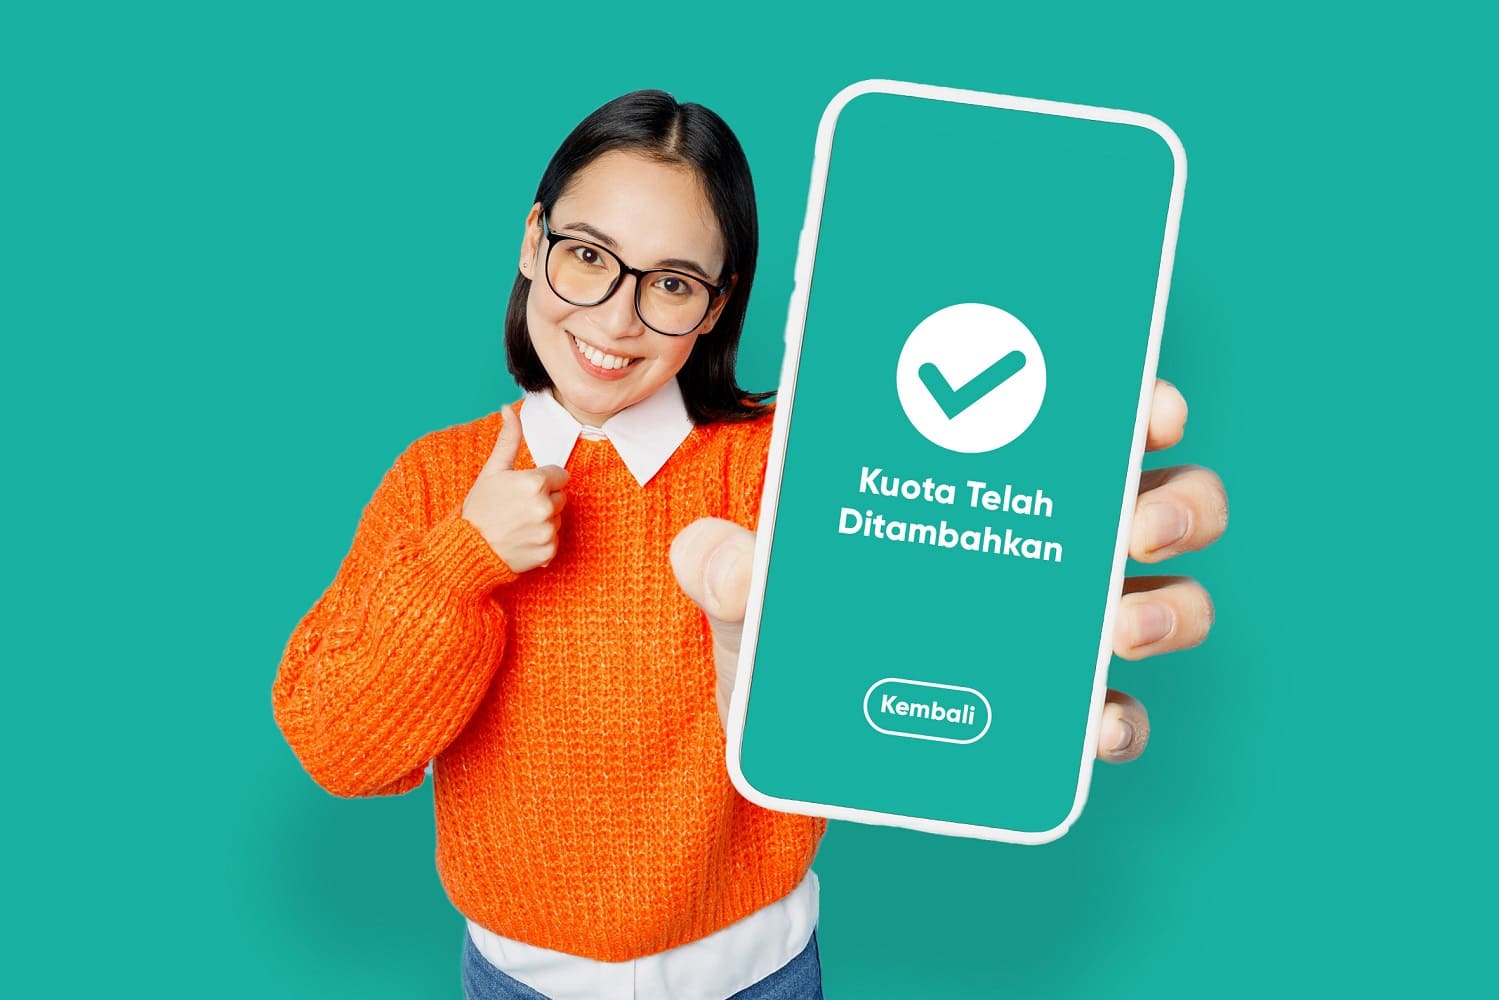 Kode Dial Kuota Gratis Indosat. Cara Mendapatkan Kuota Gratis Indosat dengan Mudah